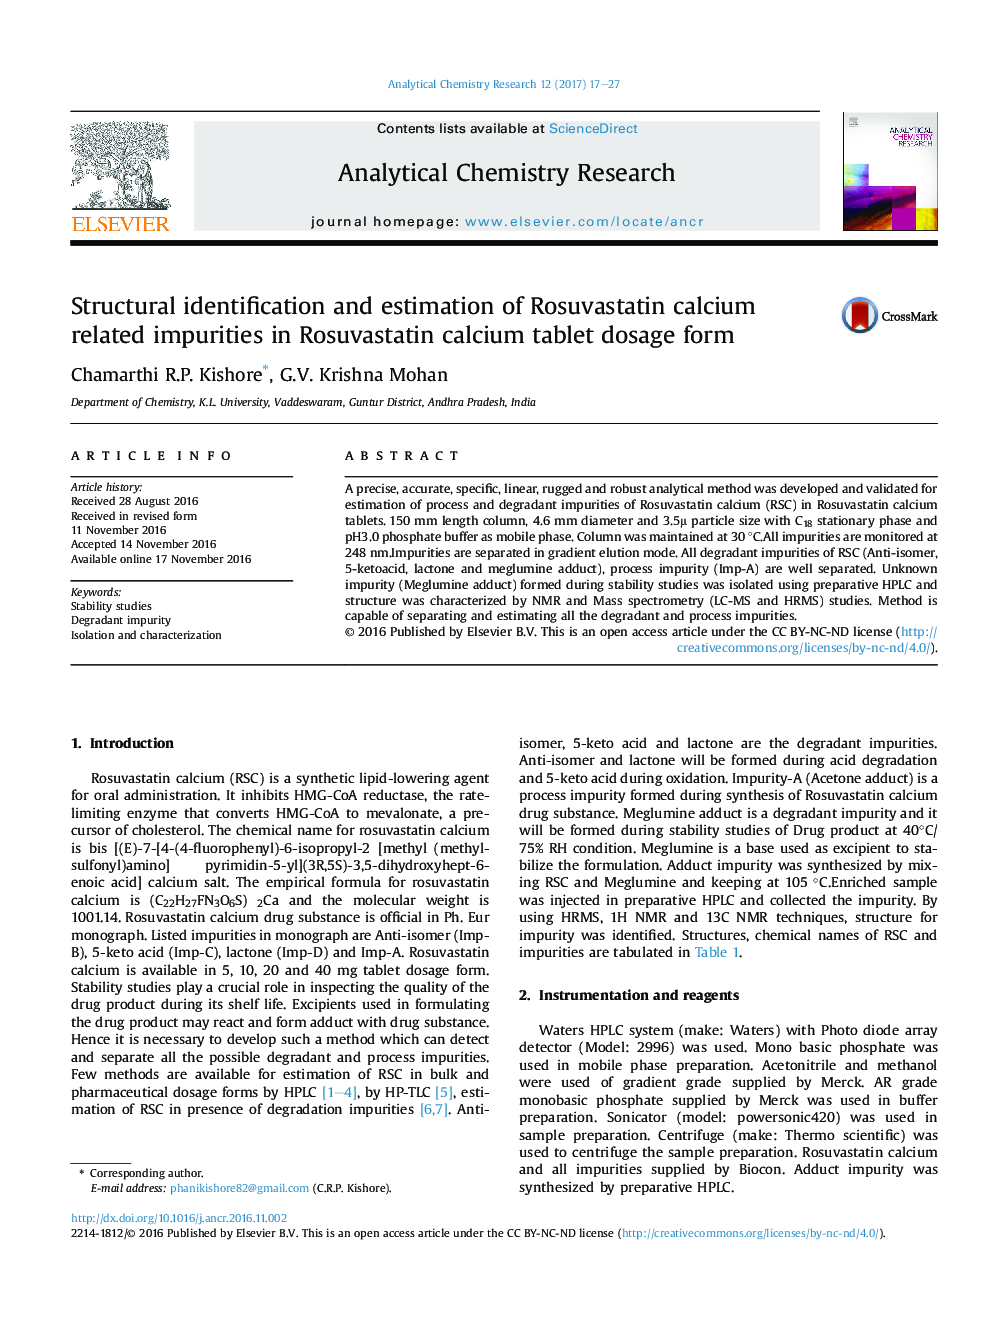 Structural identification and estimation of Rosuvastatin calcium related impurities in Rosuvastatin calcium tablet dosage form